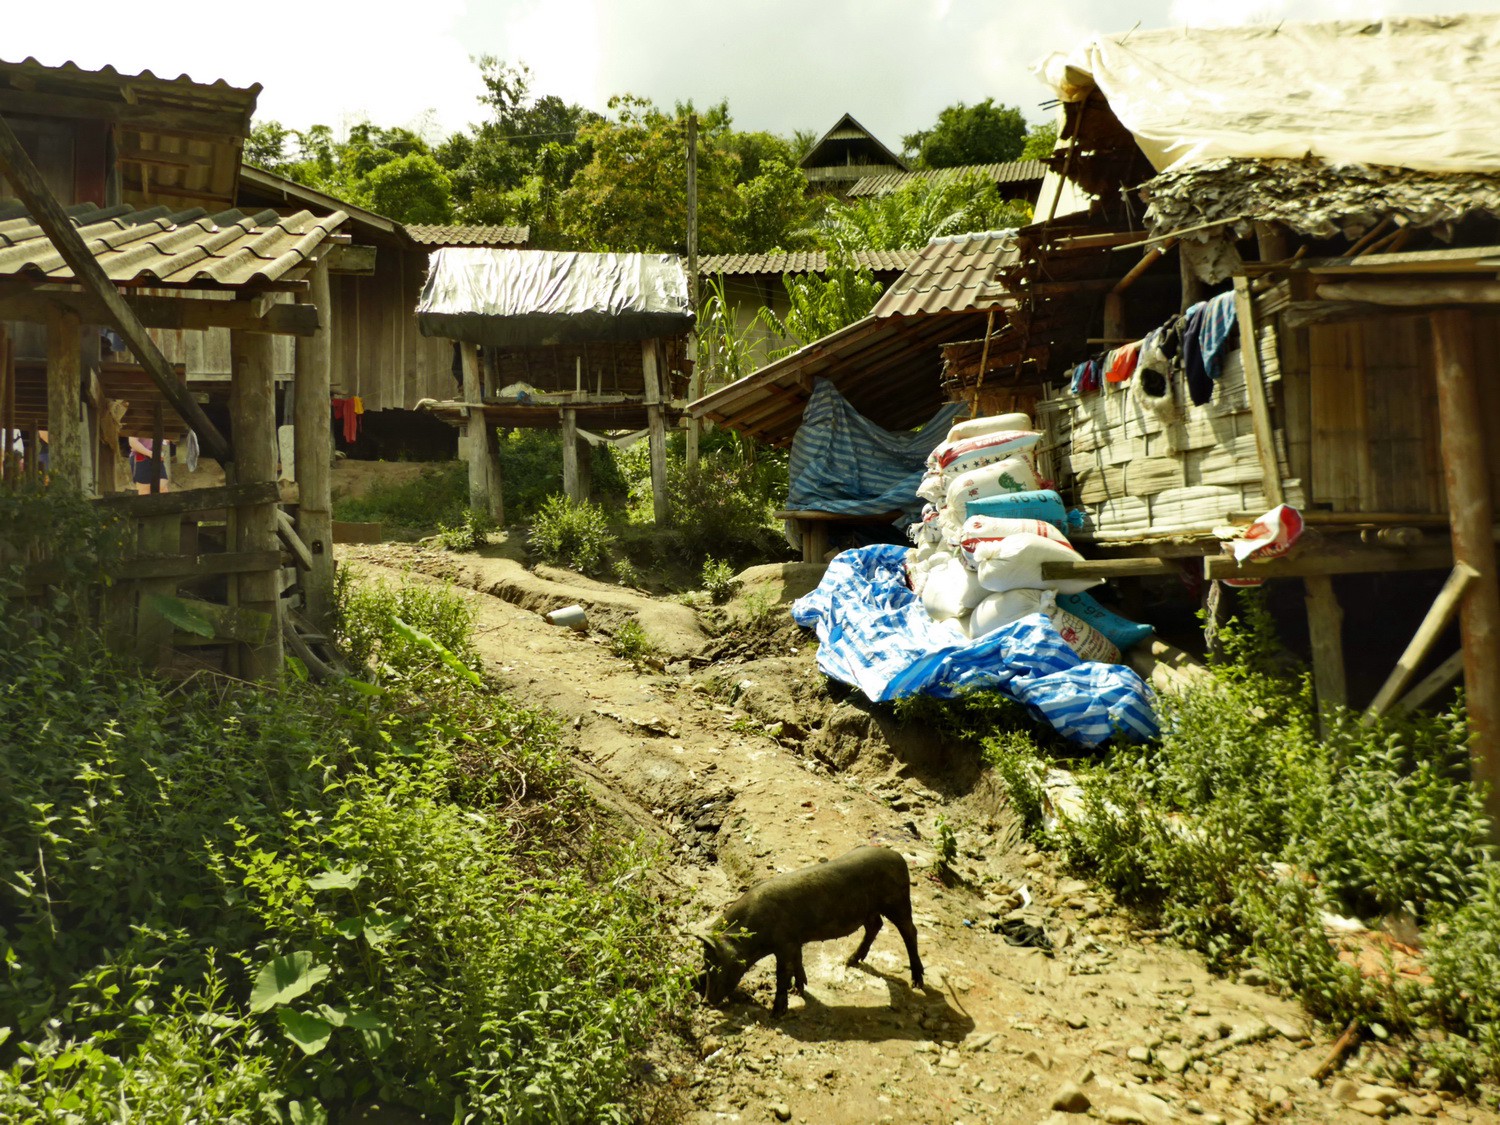 Village of the Karen tribe